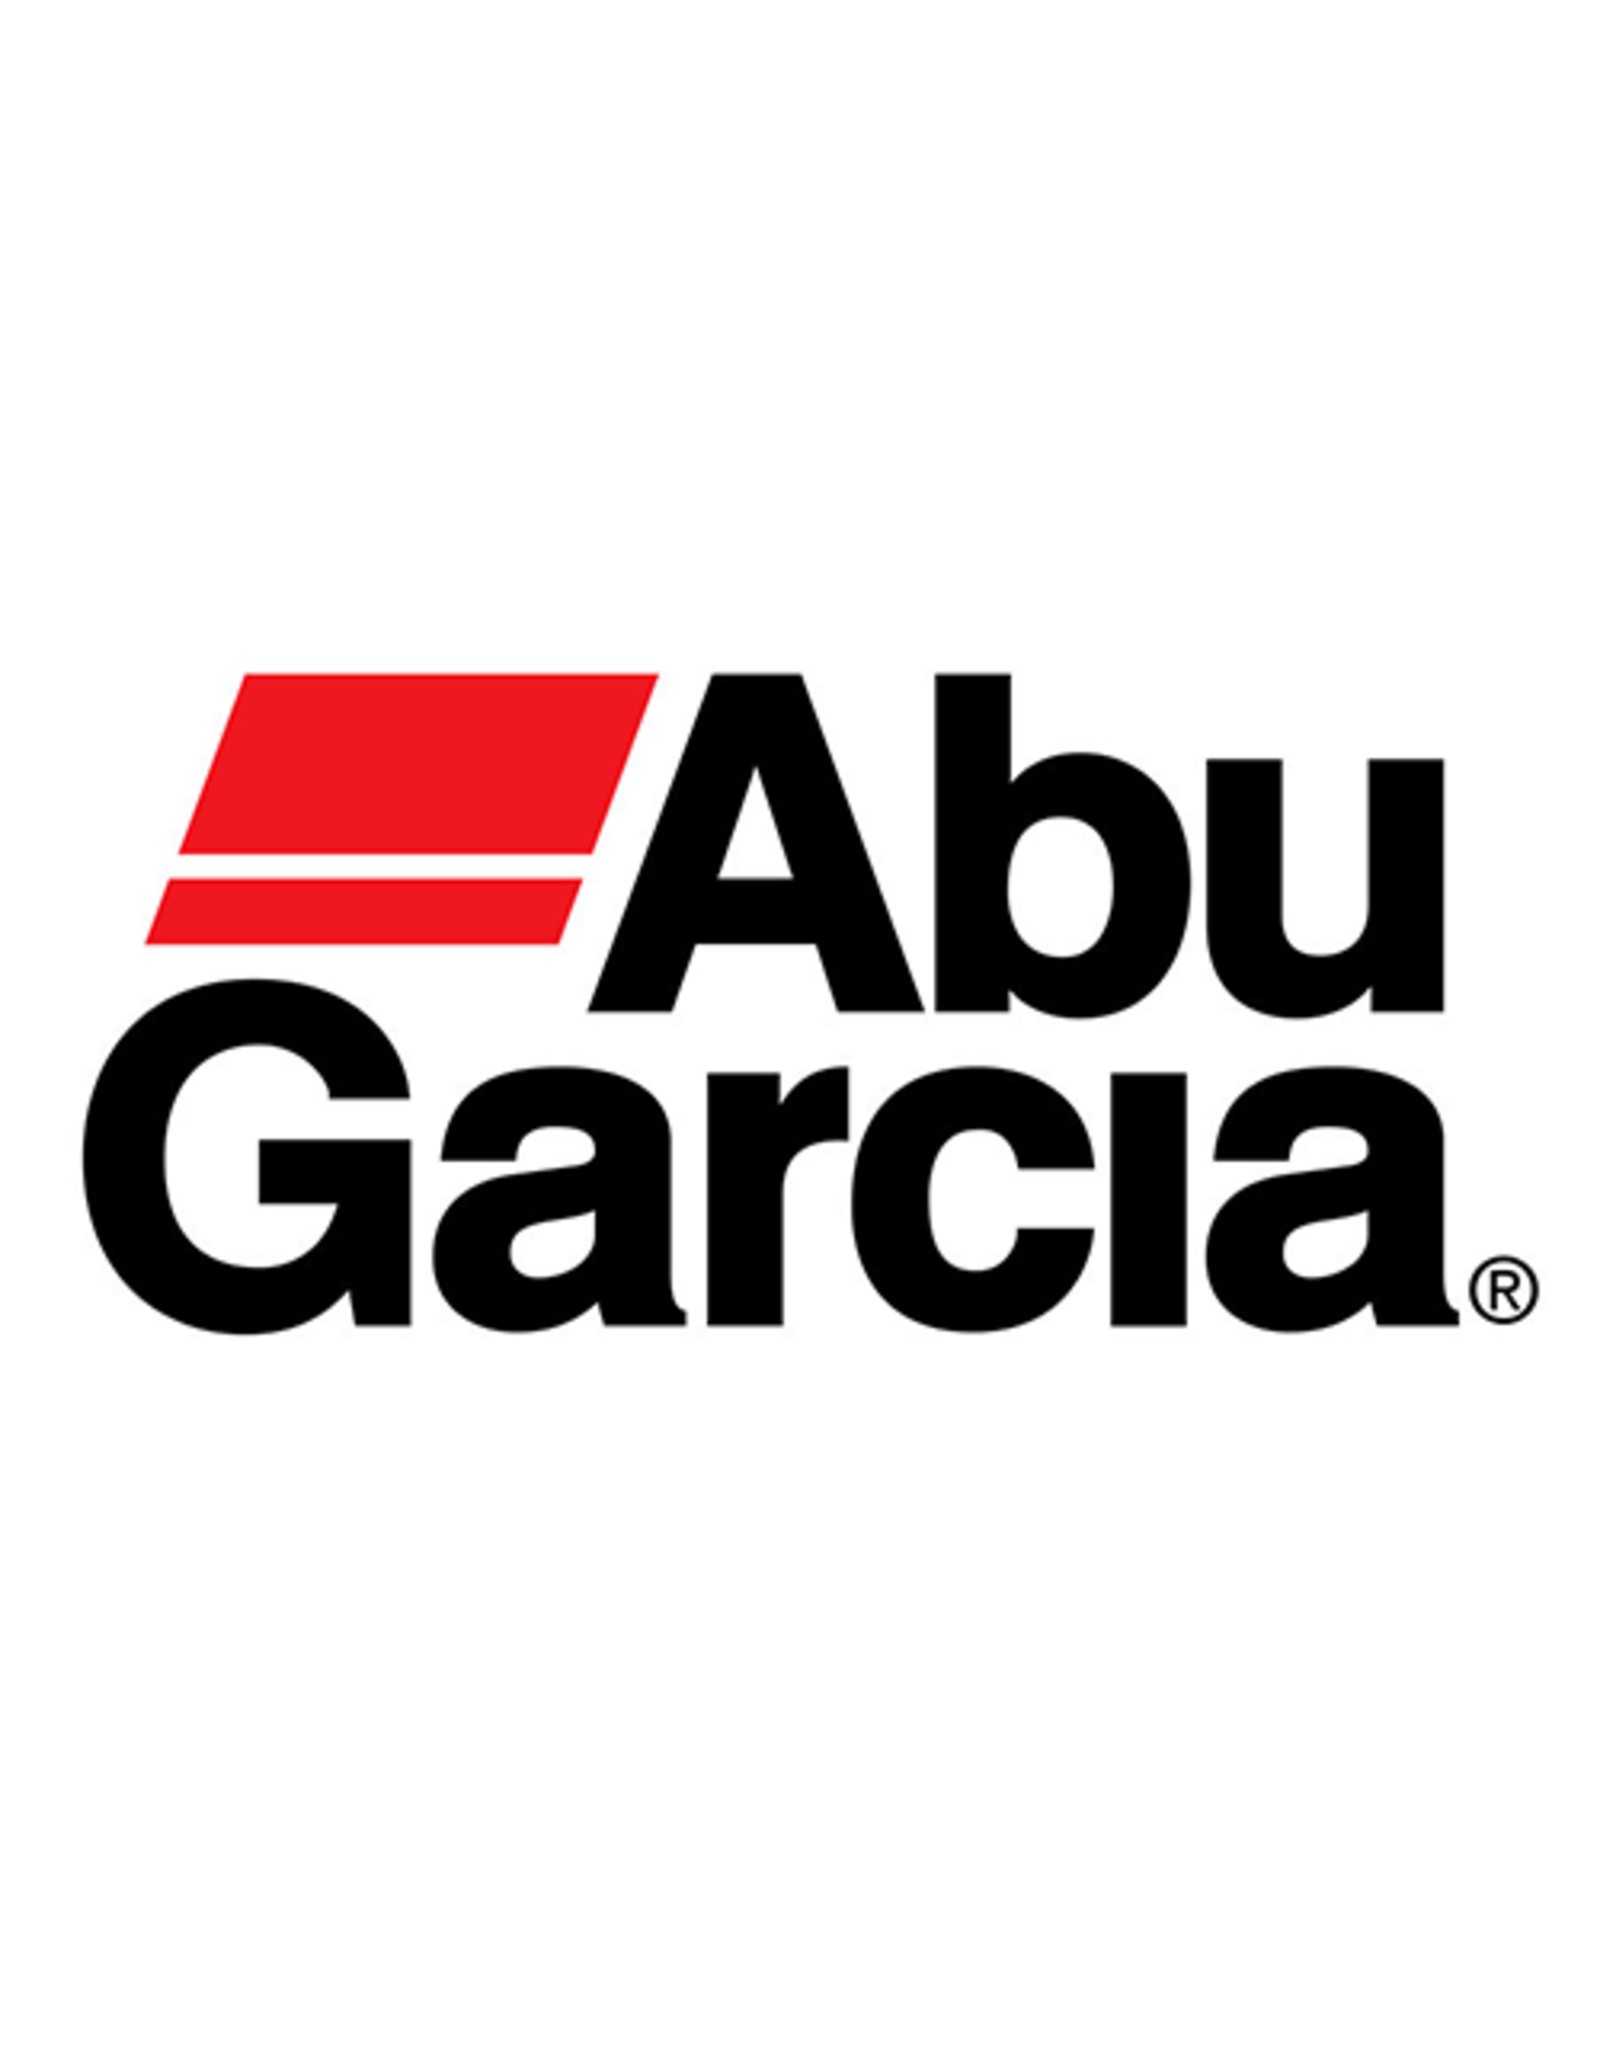 Abu Garcia 9368  DRIVE SHAFT AND RATCHET/ NLA